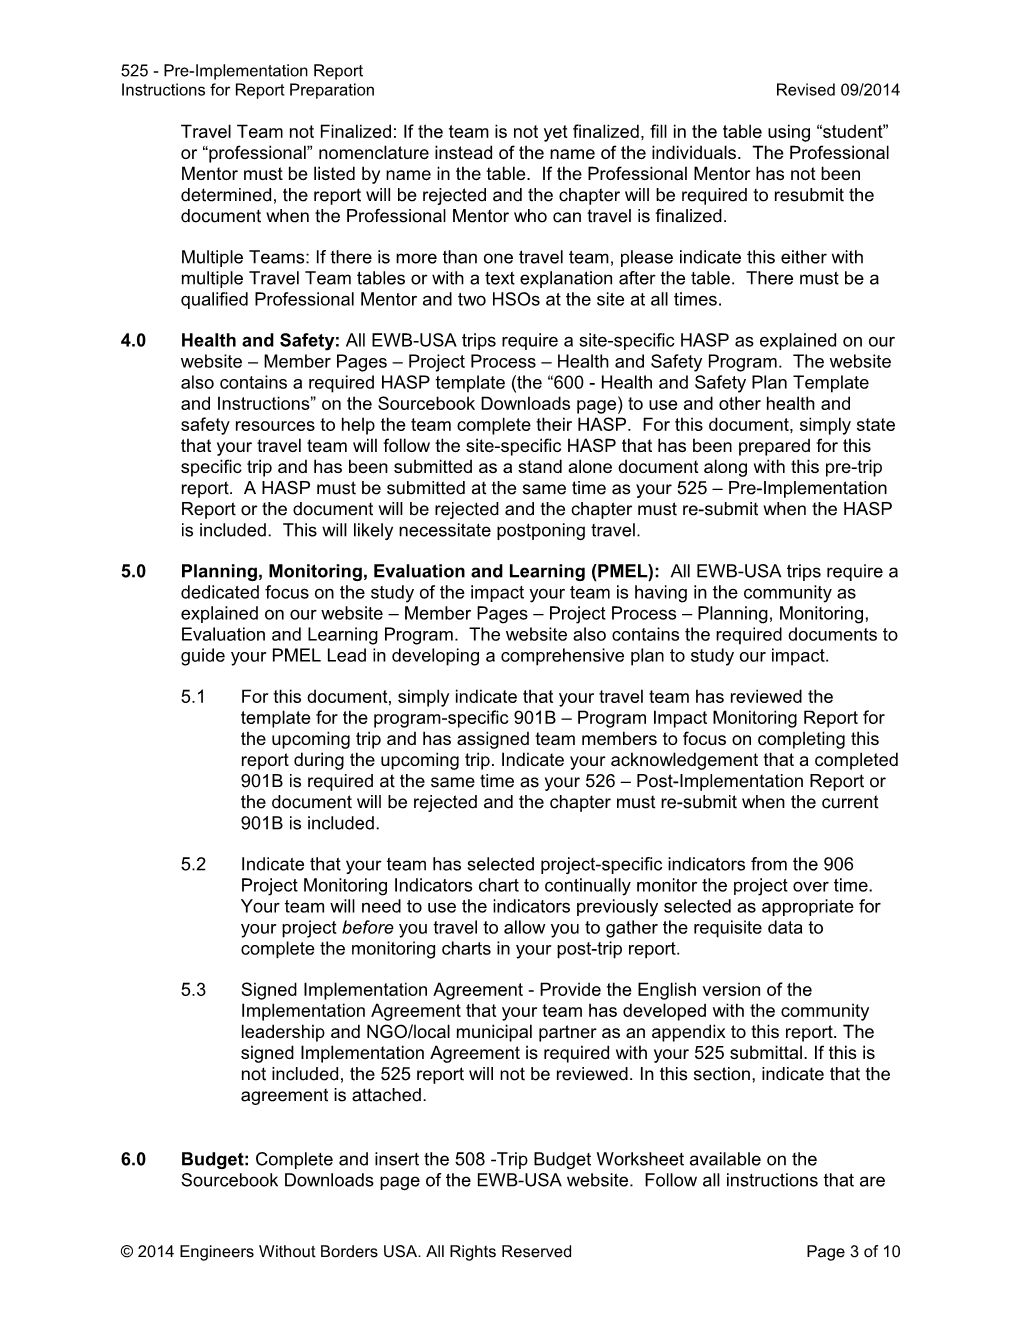 Document 525 - Pre-Implementation Report